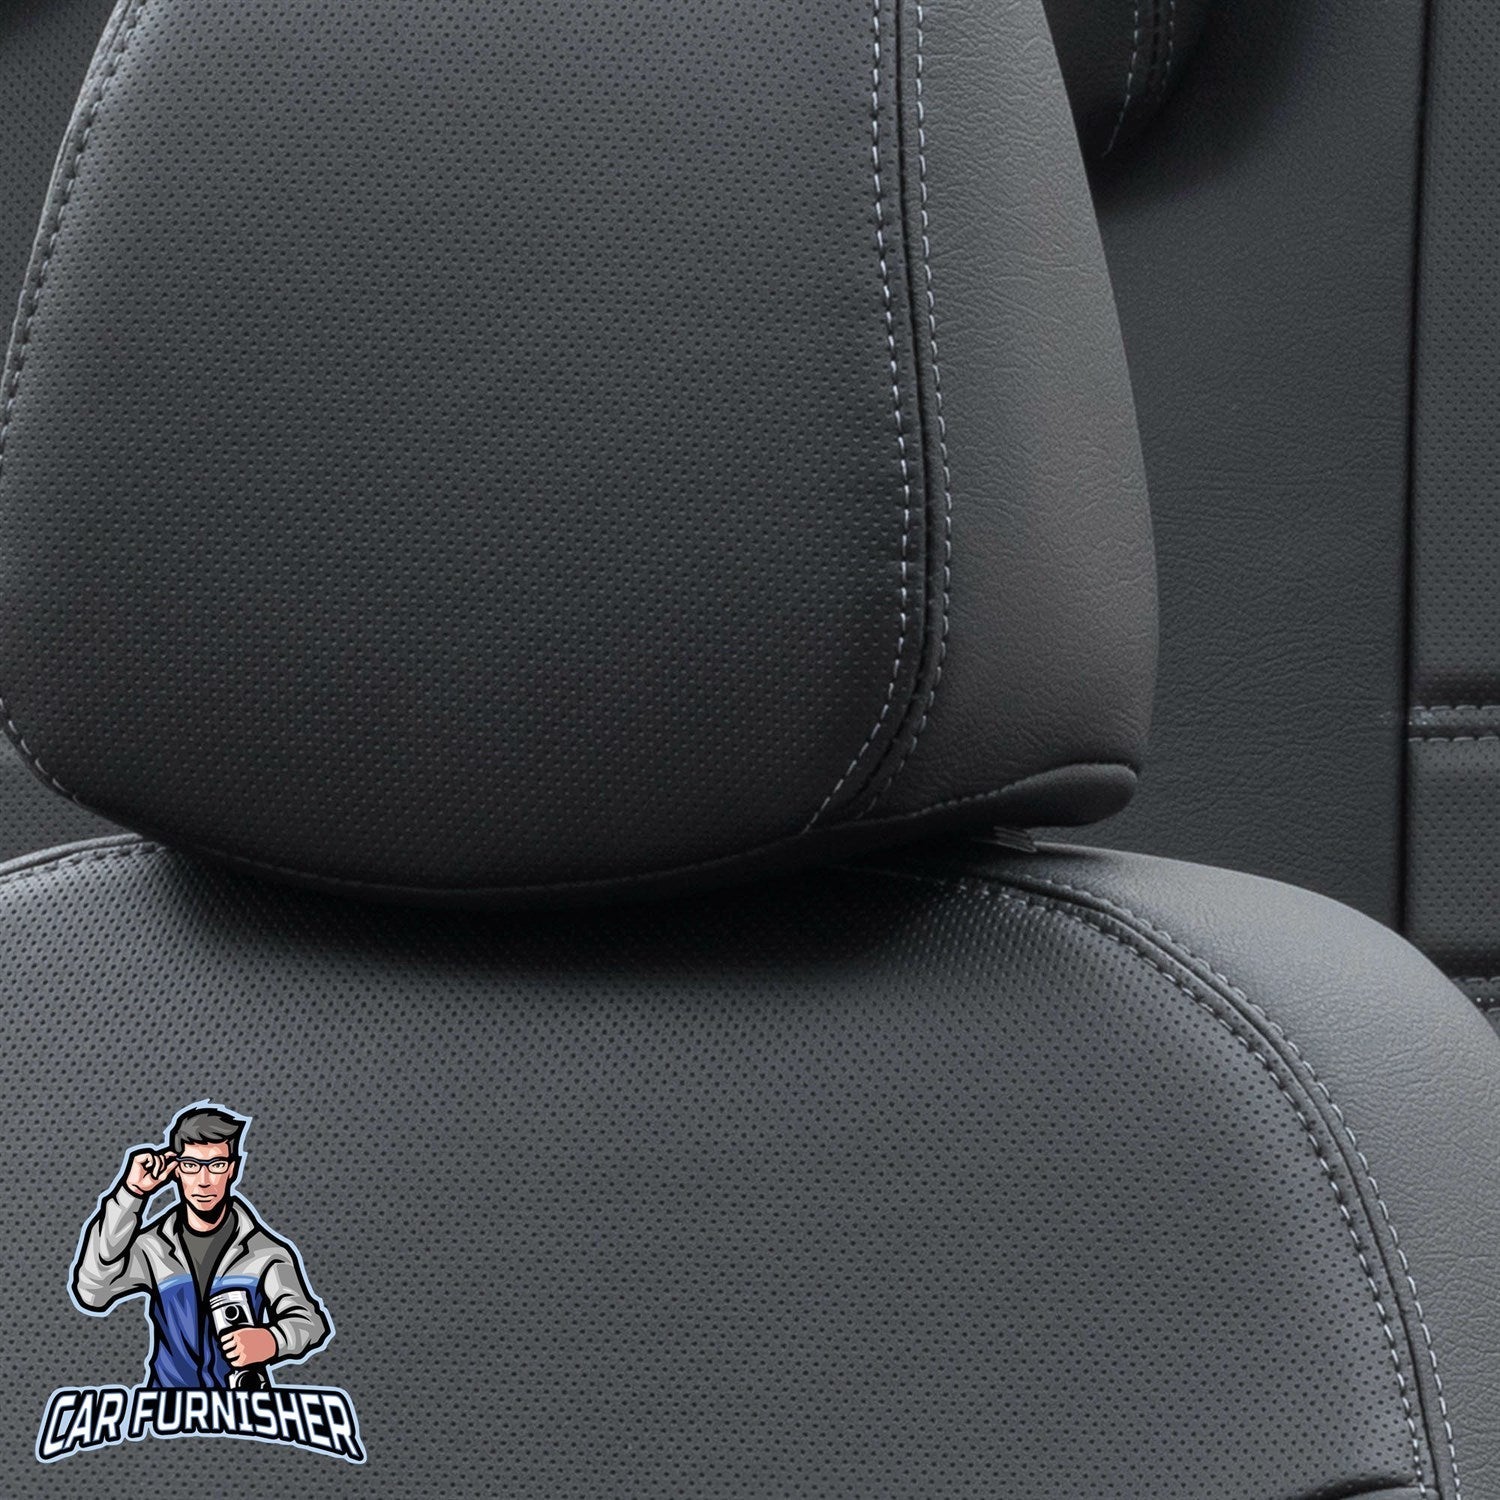 Mazda CX5 Seat Cover Istanbul Leather Design Black Leather